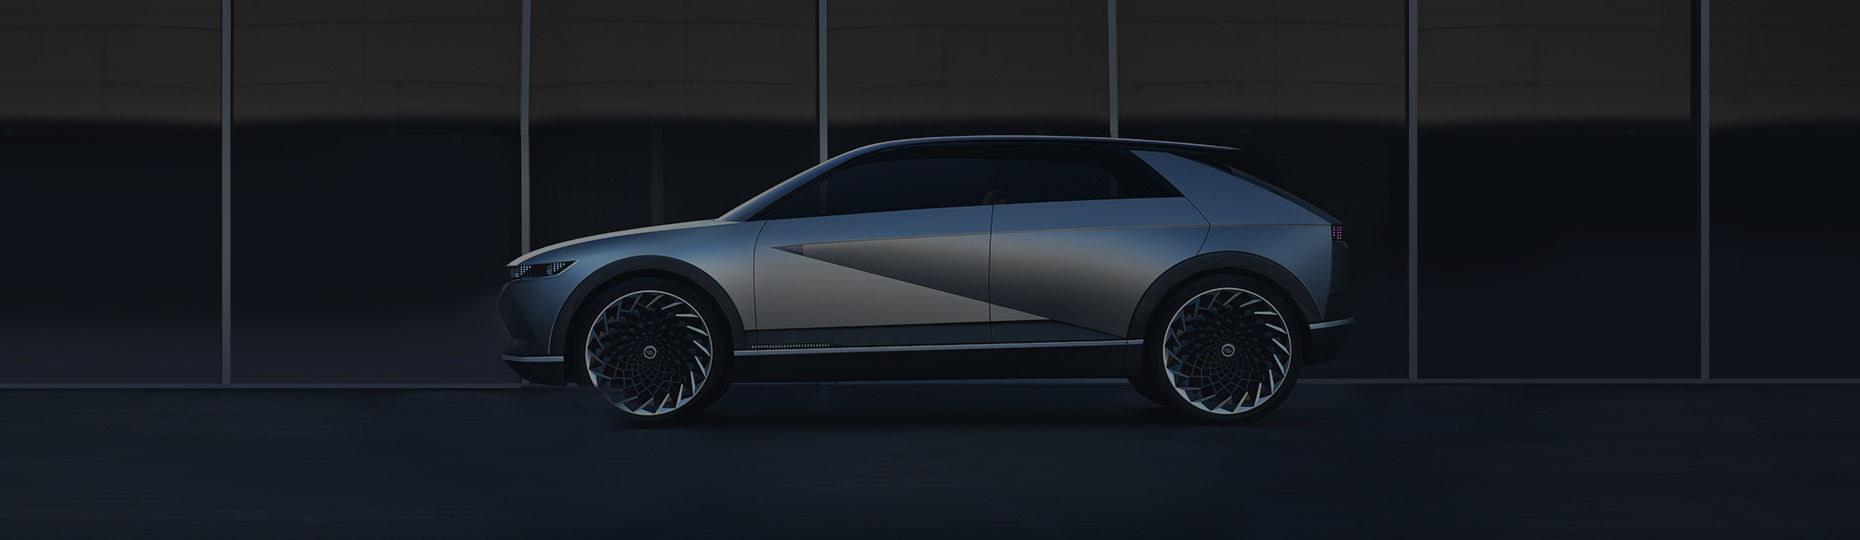 2019 concept car 45 side